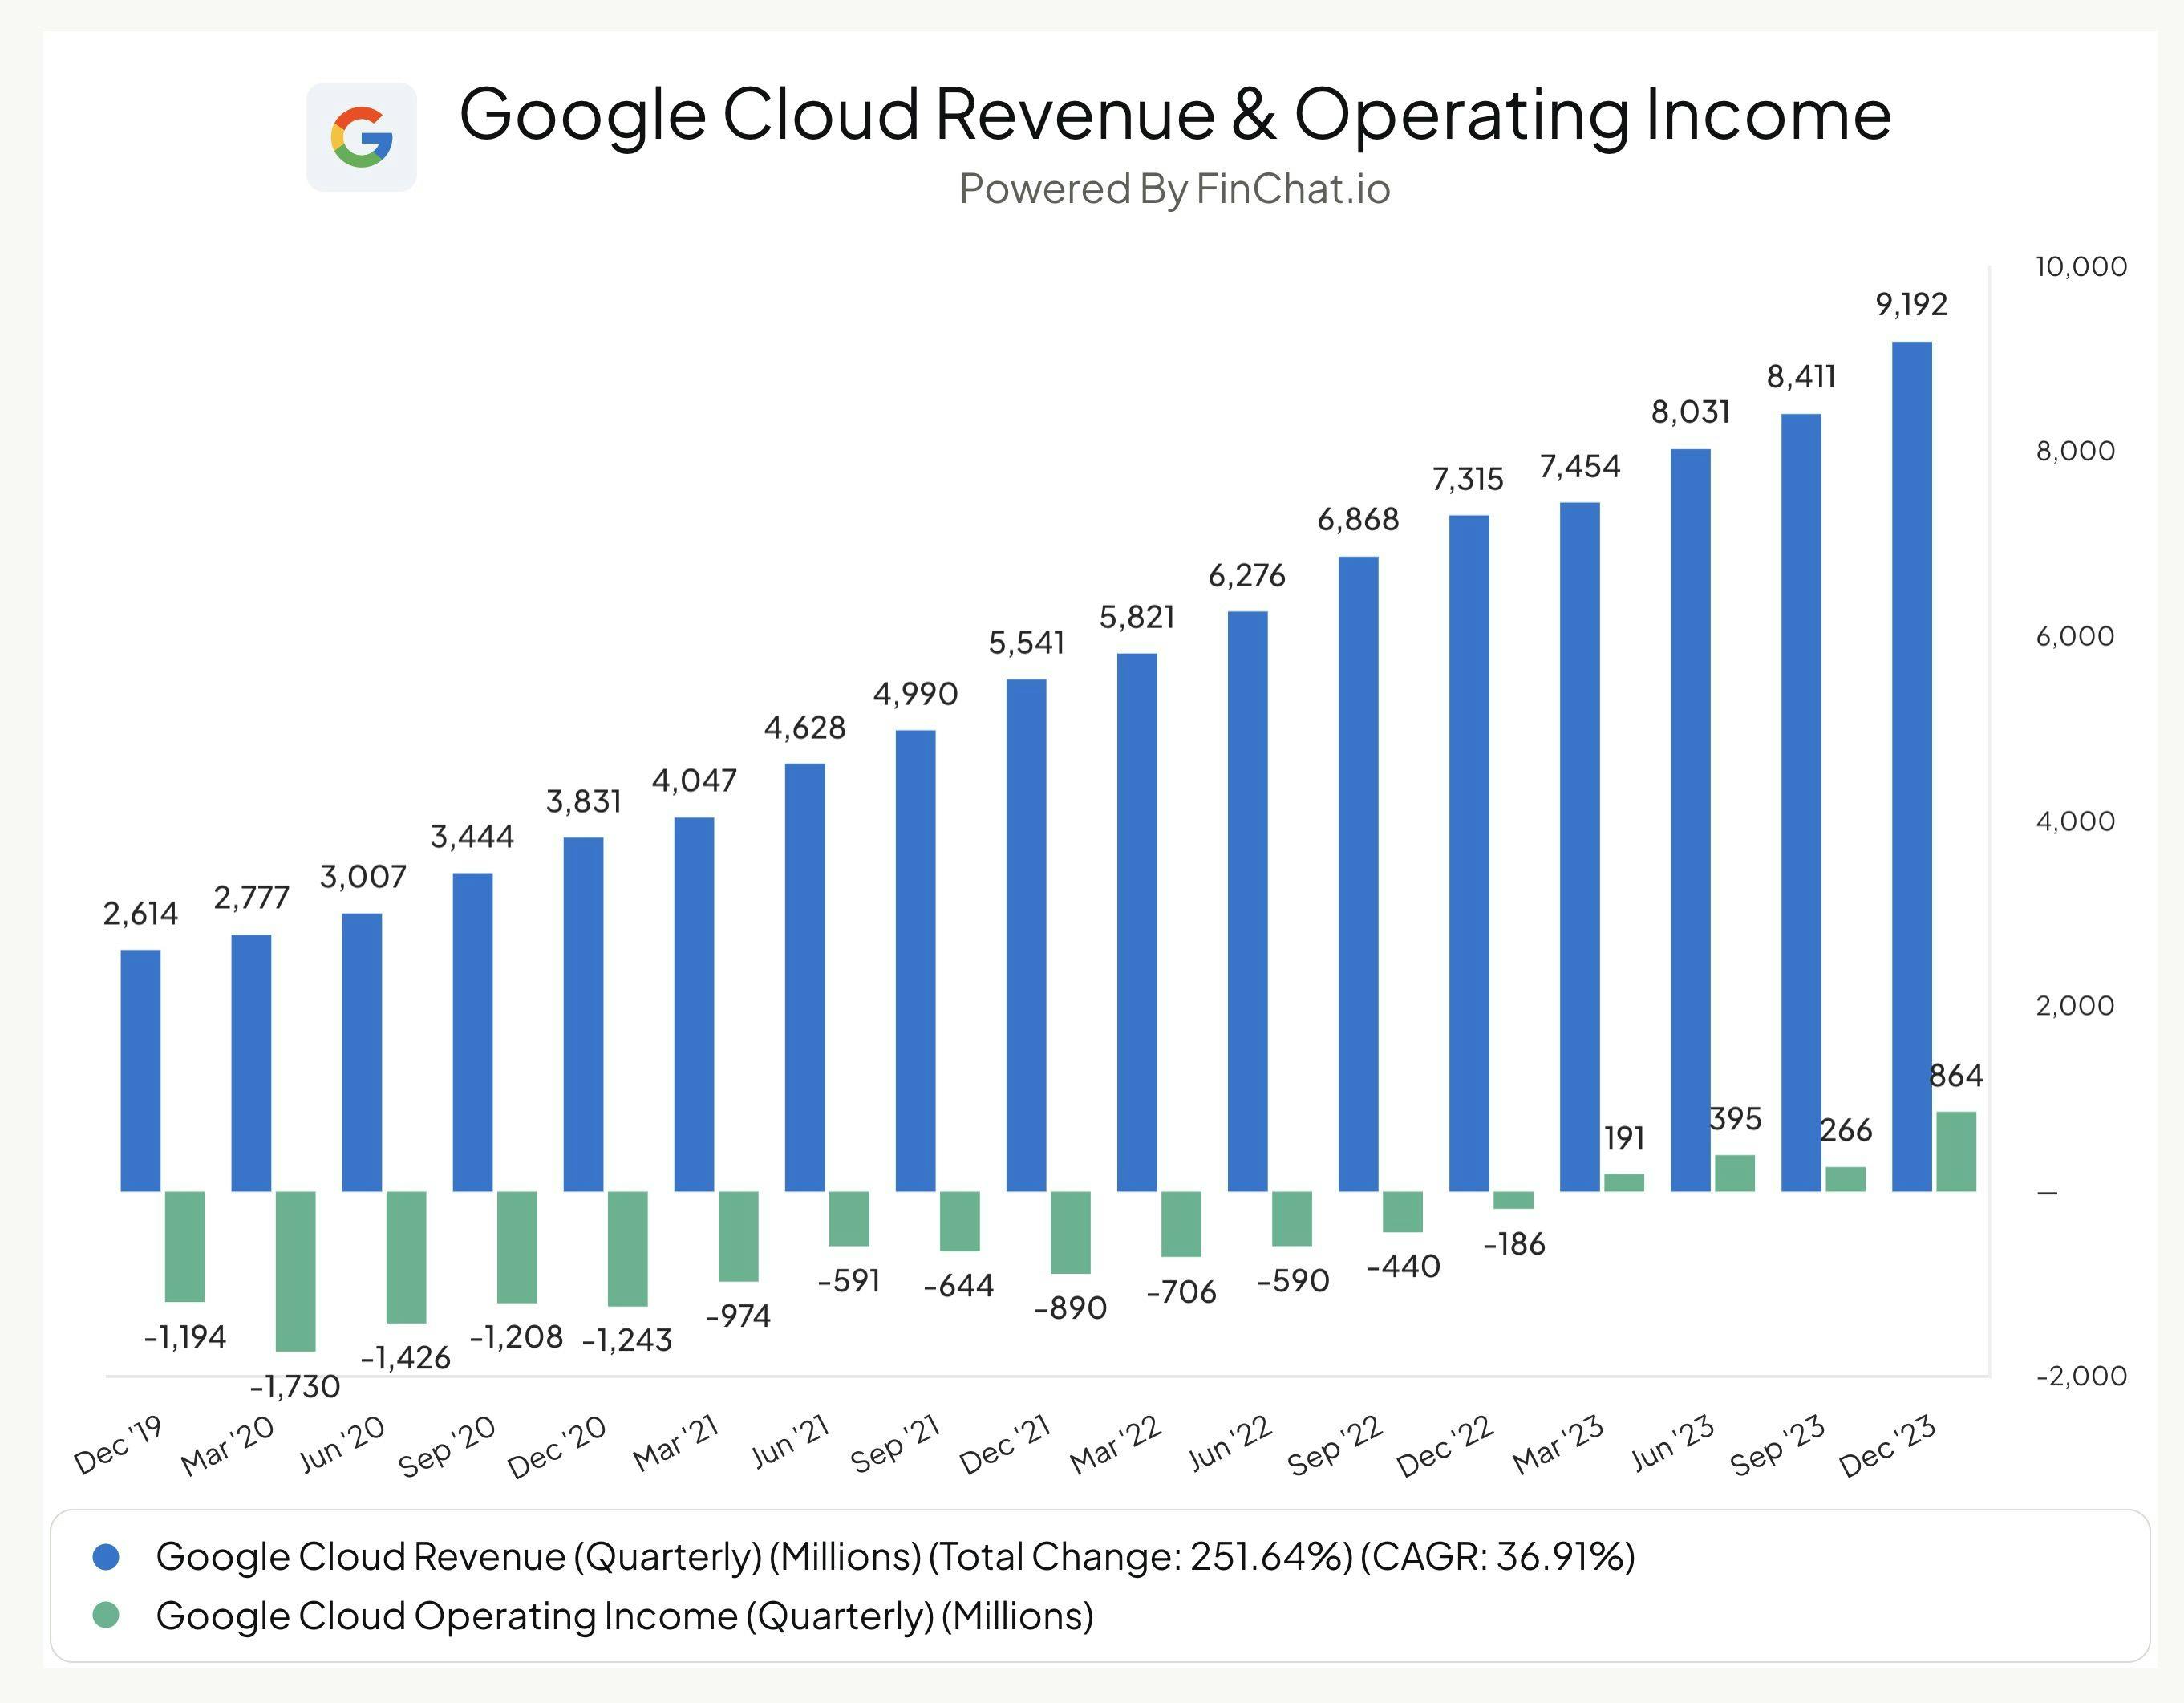 Google Cloud Revenue